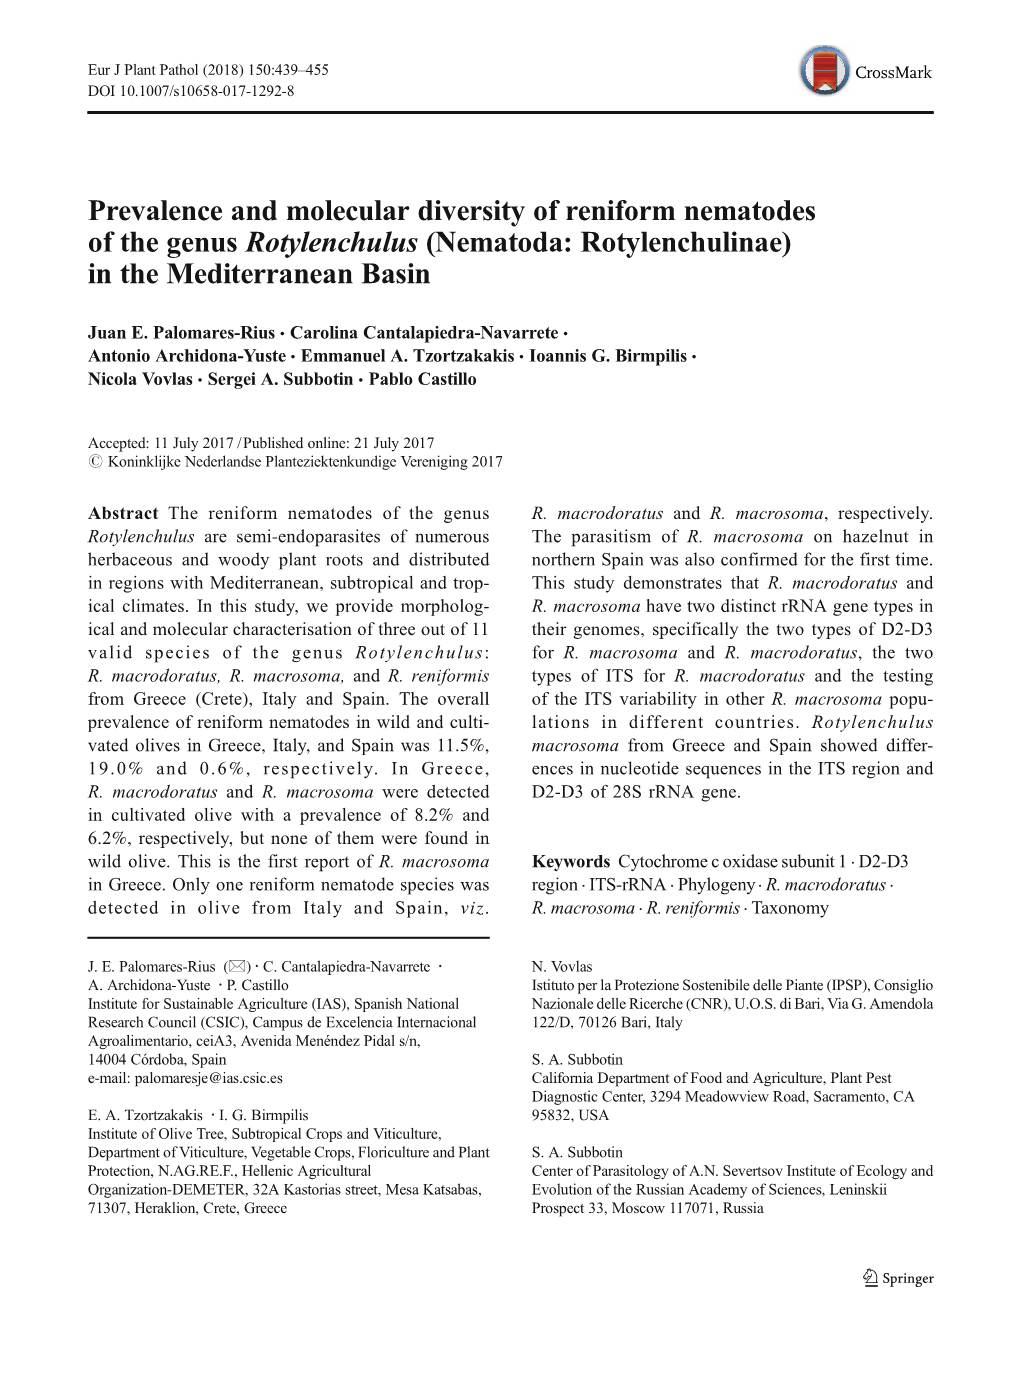 Prevalence and Molecular Diversity of Reniform Nematodes of the Genus Rotylenchulus (Nematoda: Rotylenchulinae) in the Mediterranean Basin